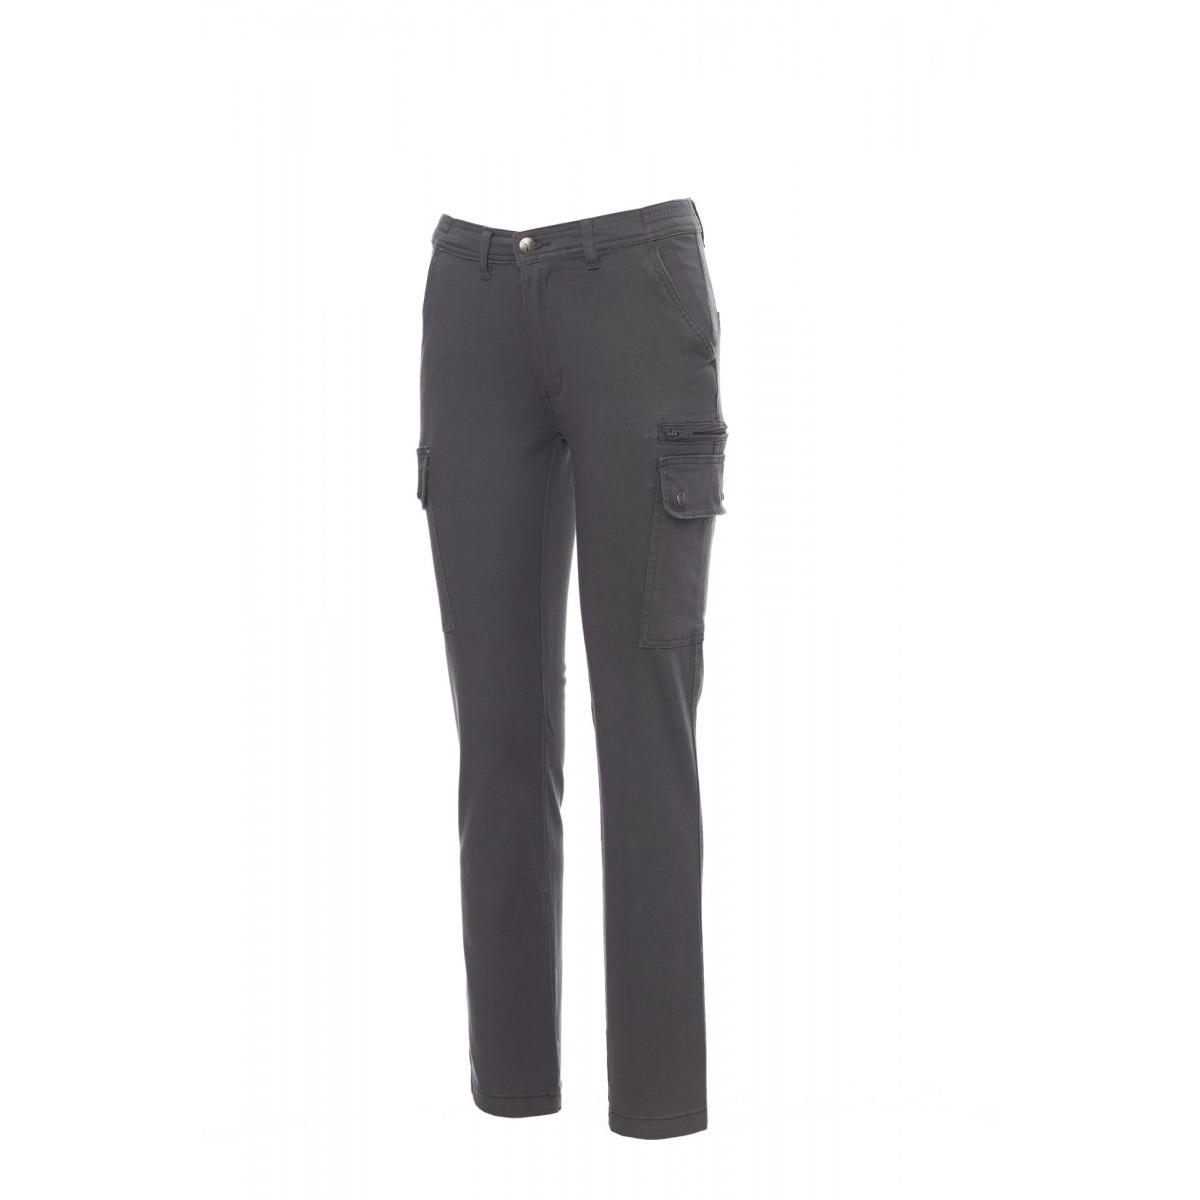 Pantalone PAYPER-FOREST LADY STRETCH elasticizzati e comodi